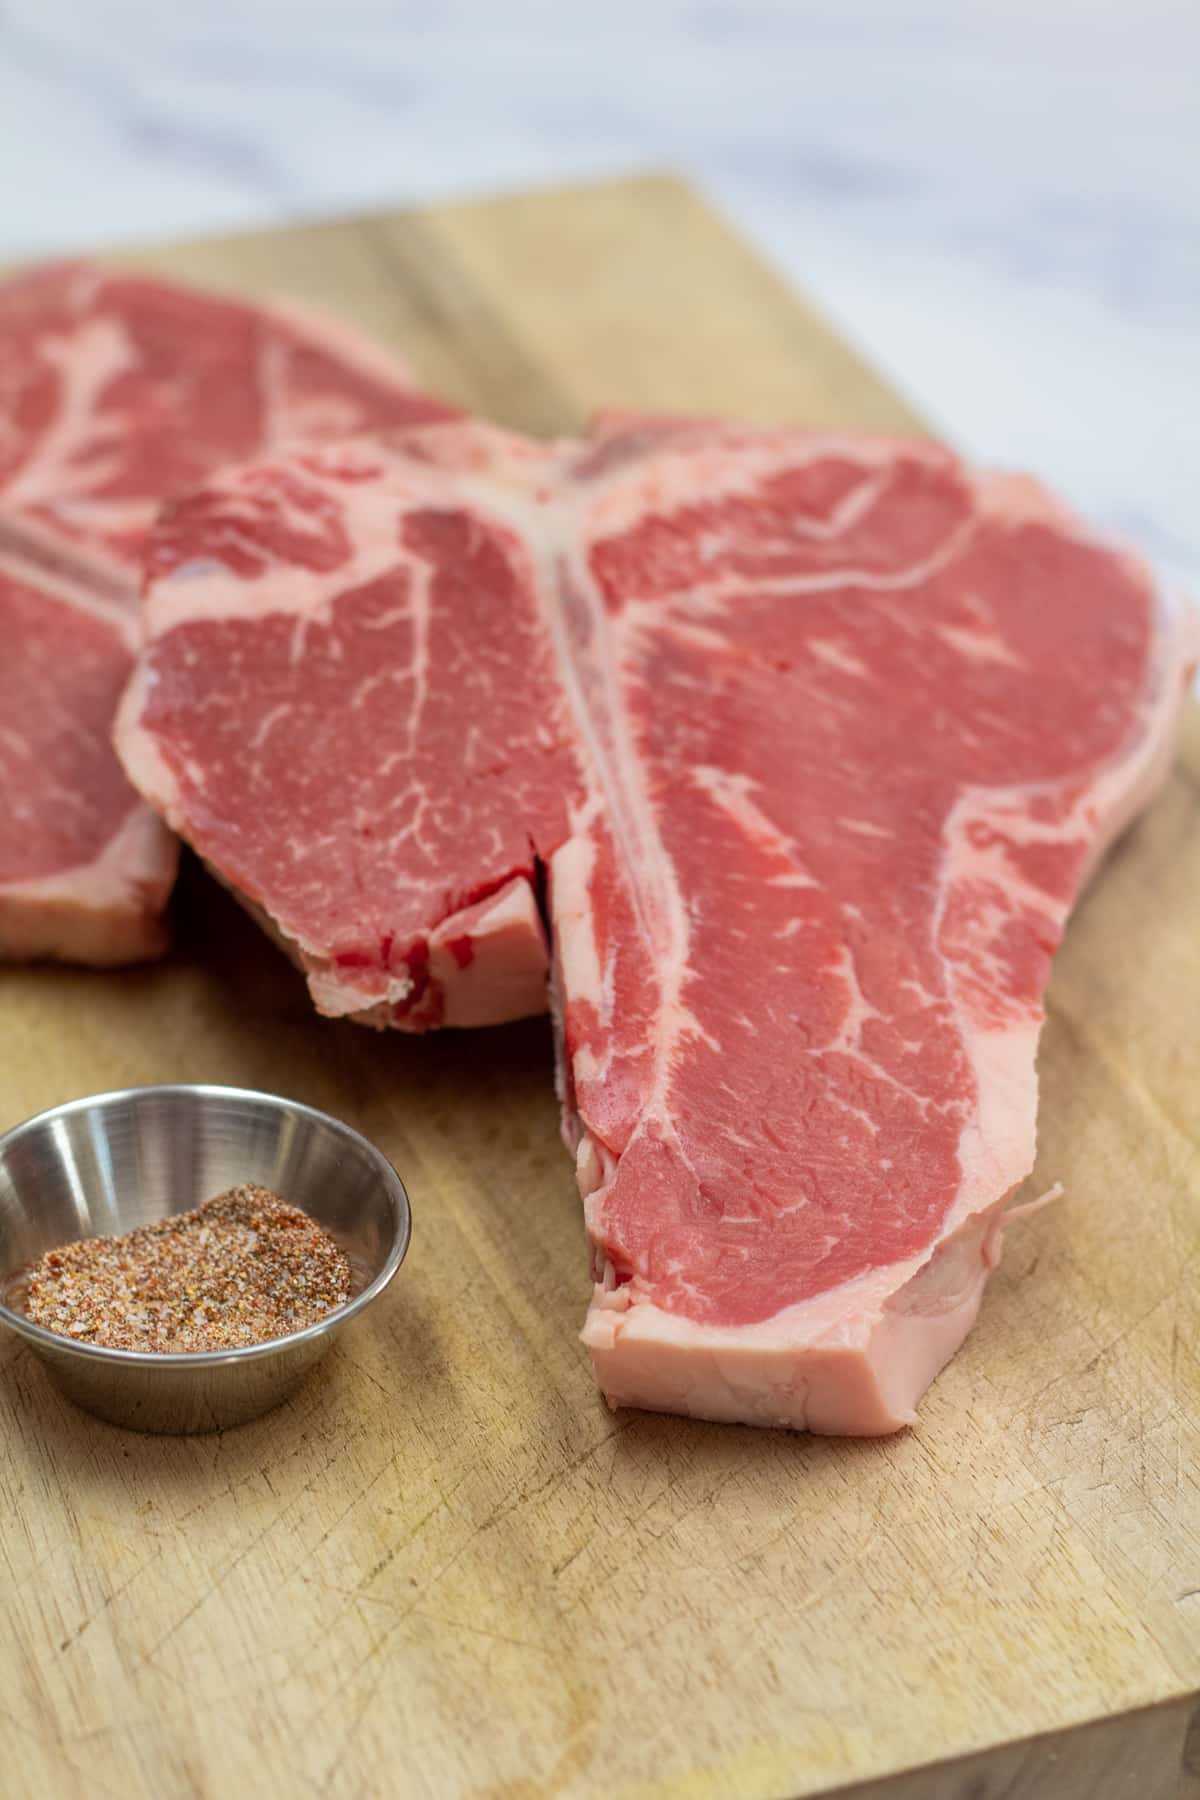 Photo showing ingredients of t-bone steak and seasoning.